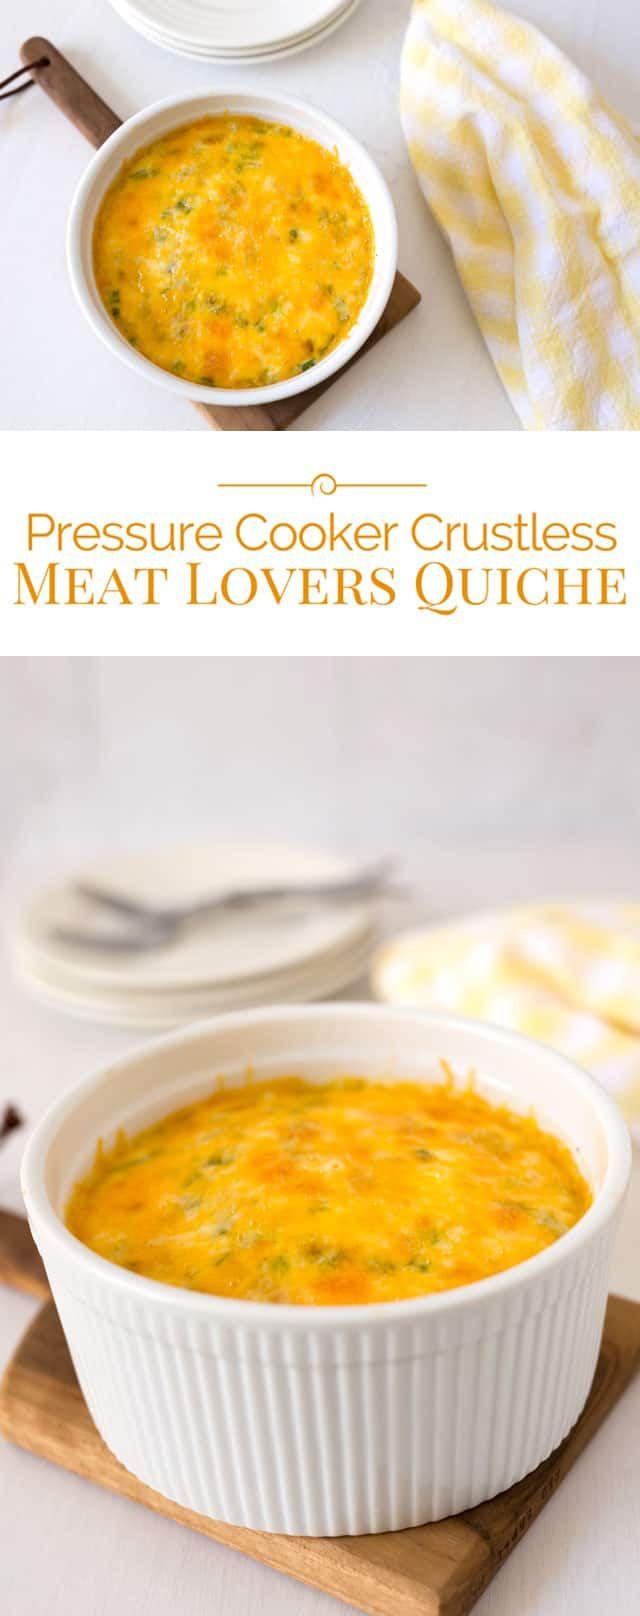 Electric Pressure Cooker Breakfast Recipes
 Pressure Cooker Crustless Meat Lovers Quiche